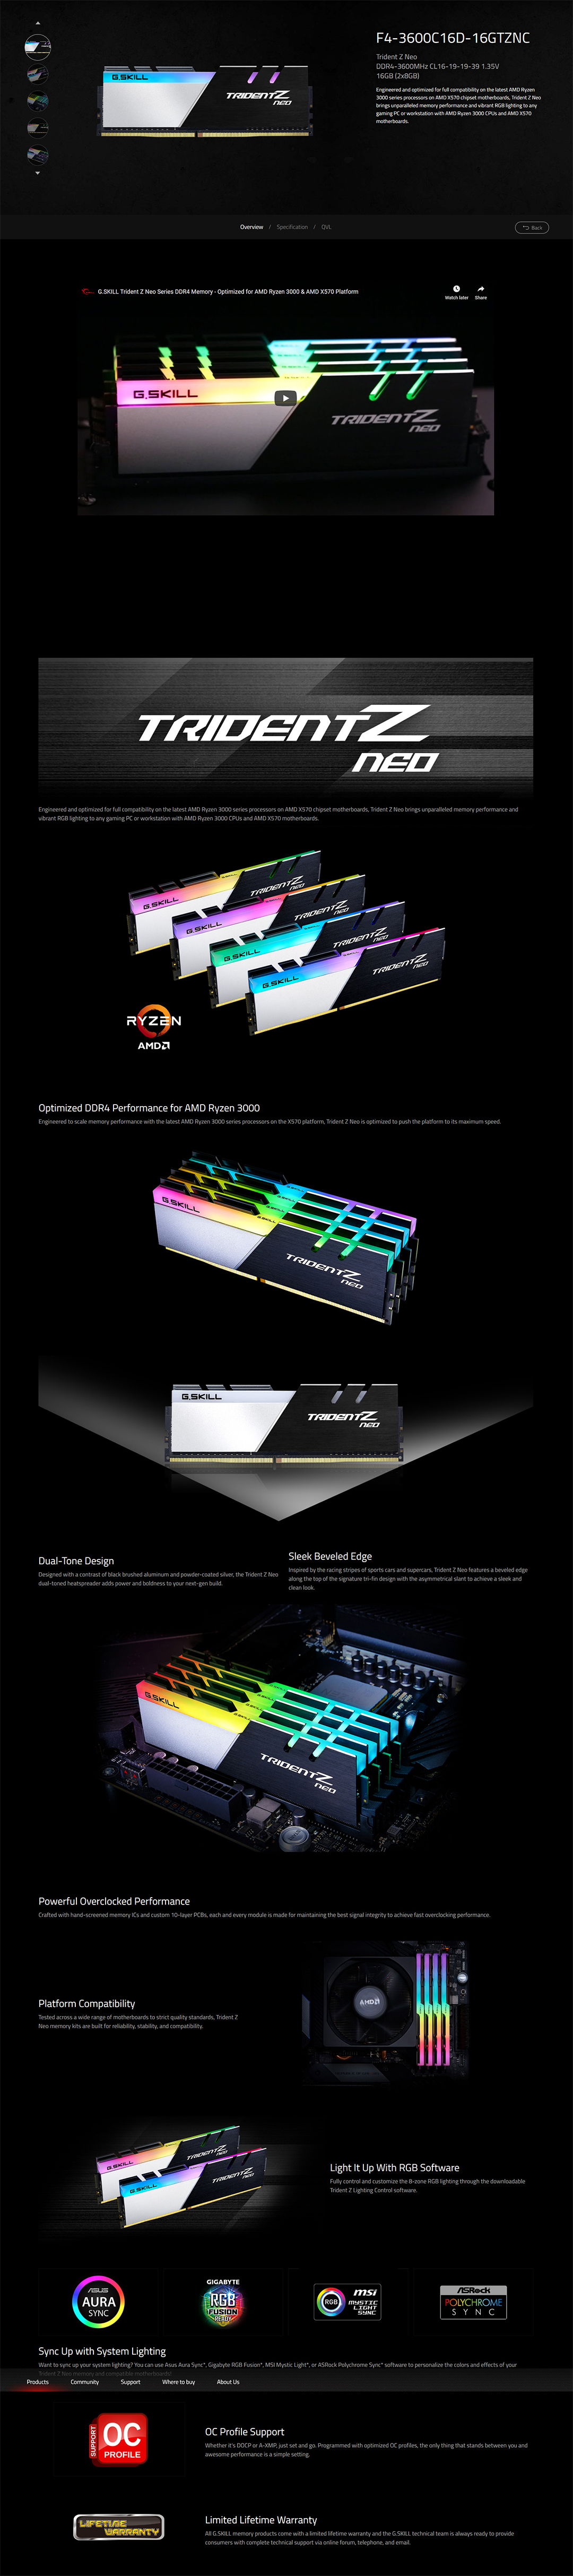 spec G.SKILL Trident Z Neo DDR4 3600MHz CL16 19 19 39 1.35V 16GB (2x8GB) Review